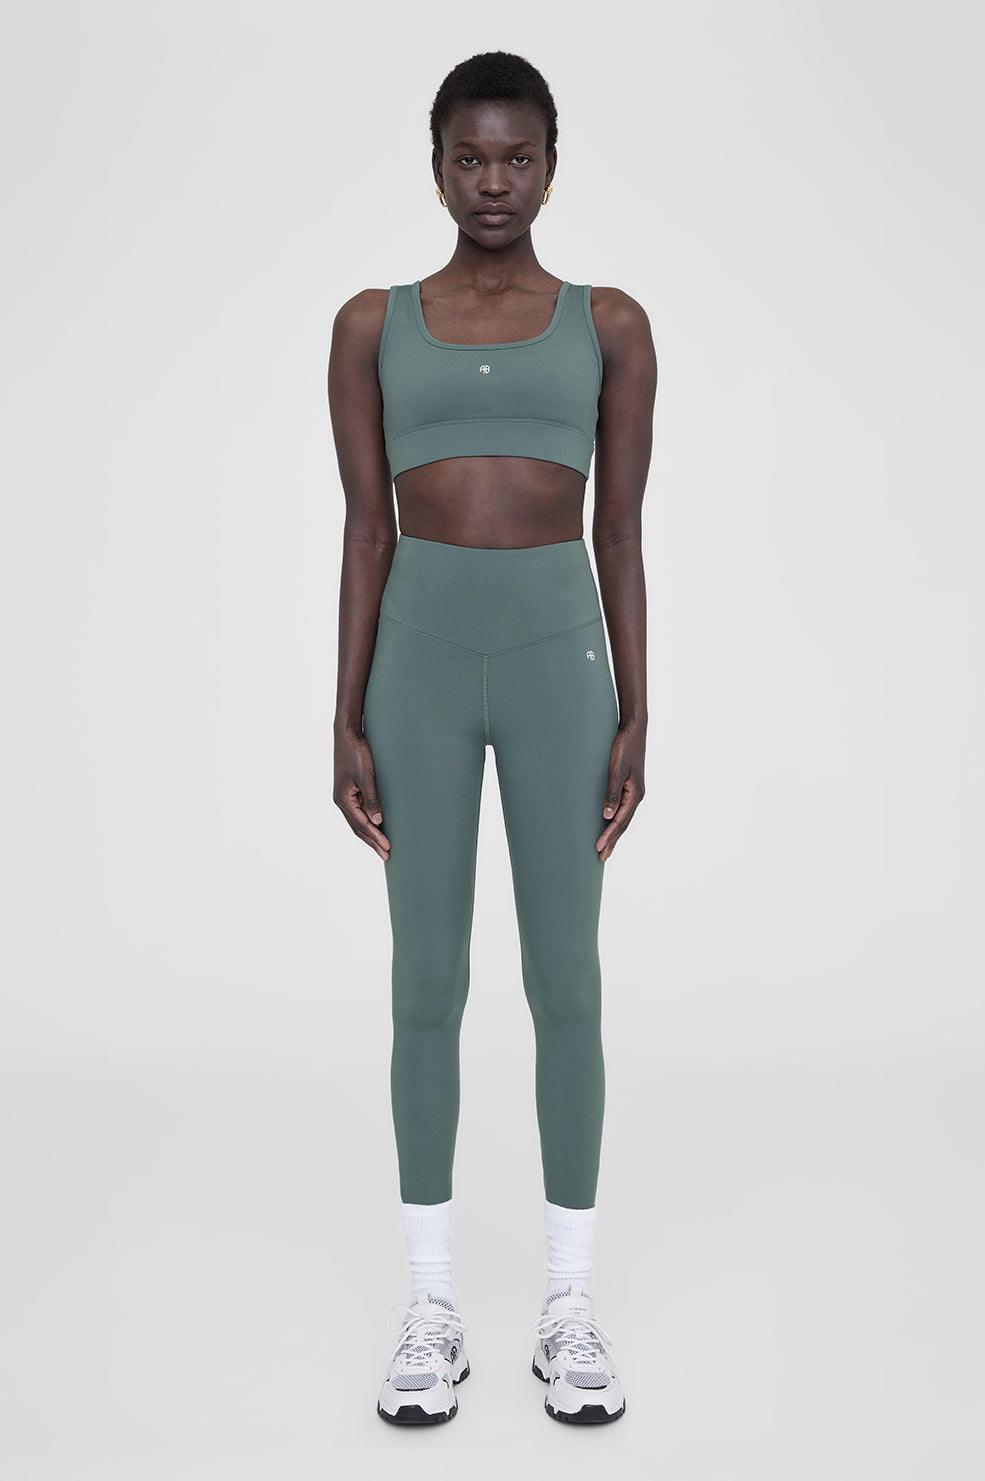 Lululemon black gray crop leggings with back zipper pocket 4 | eBay